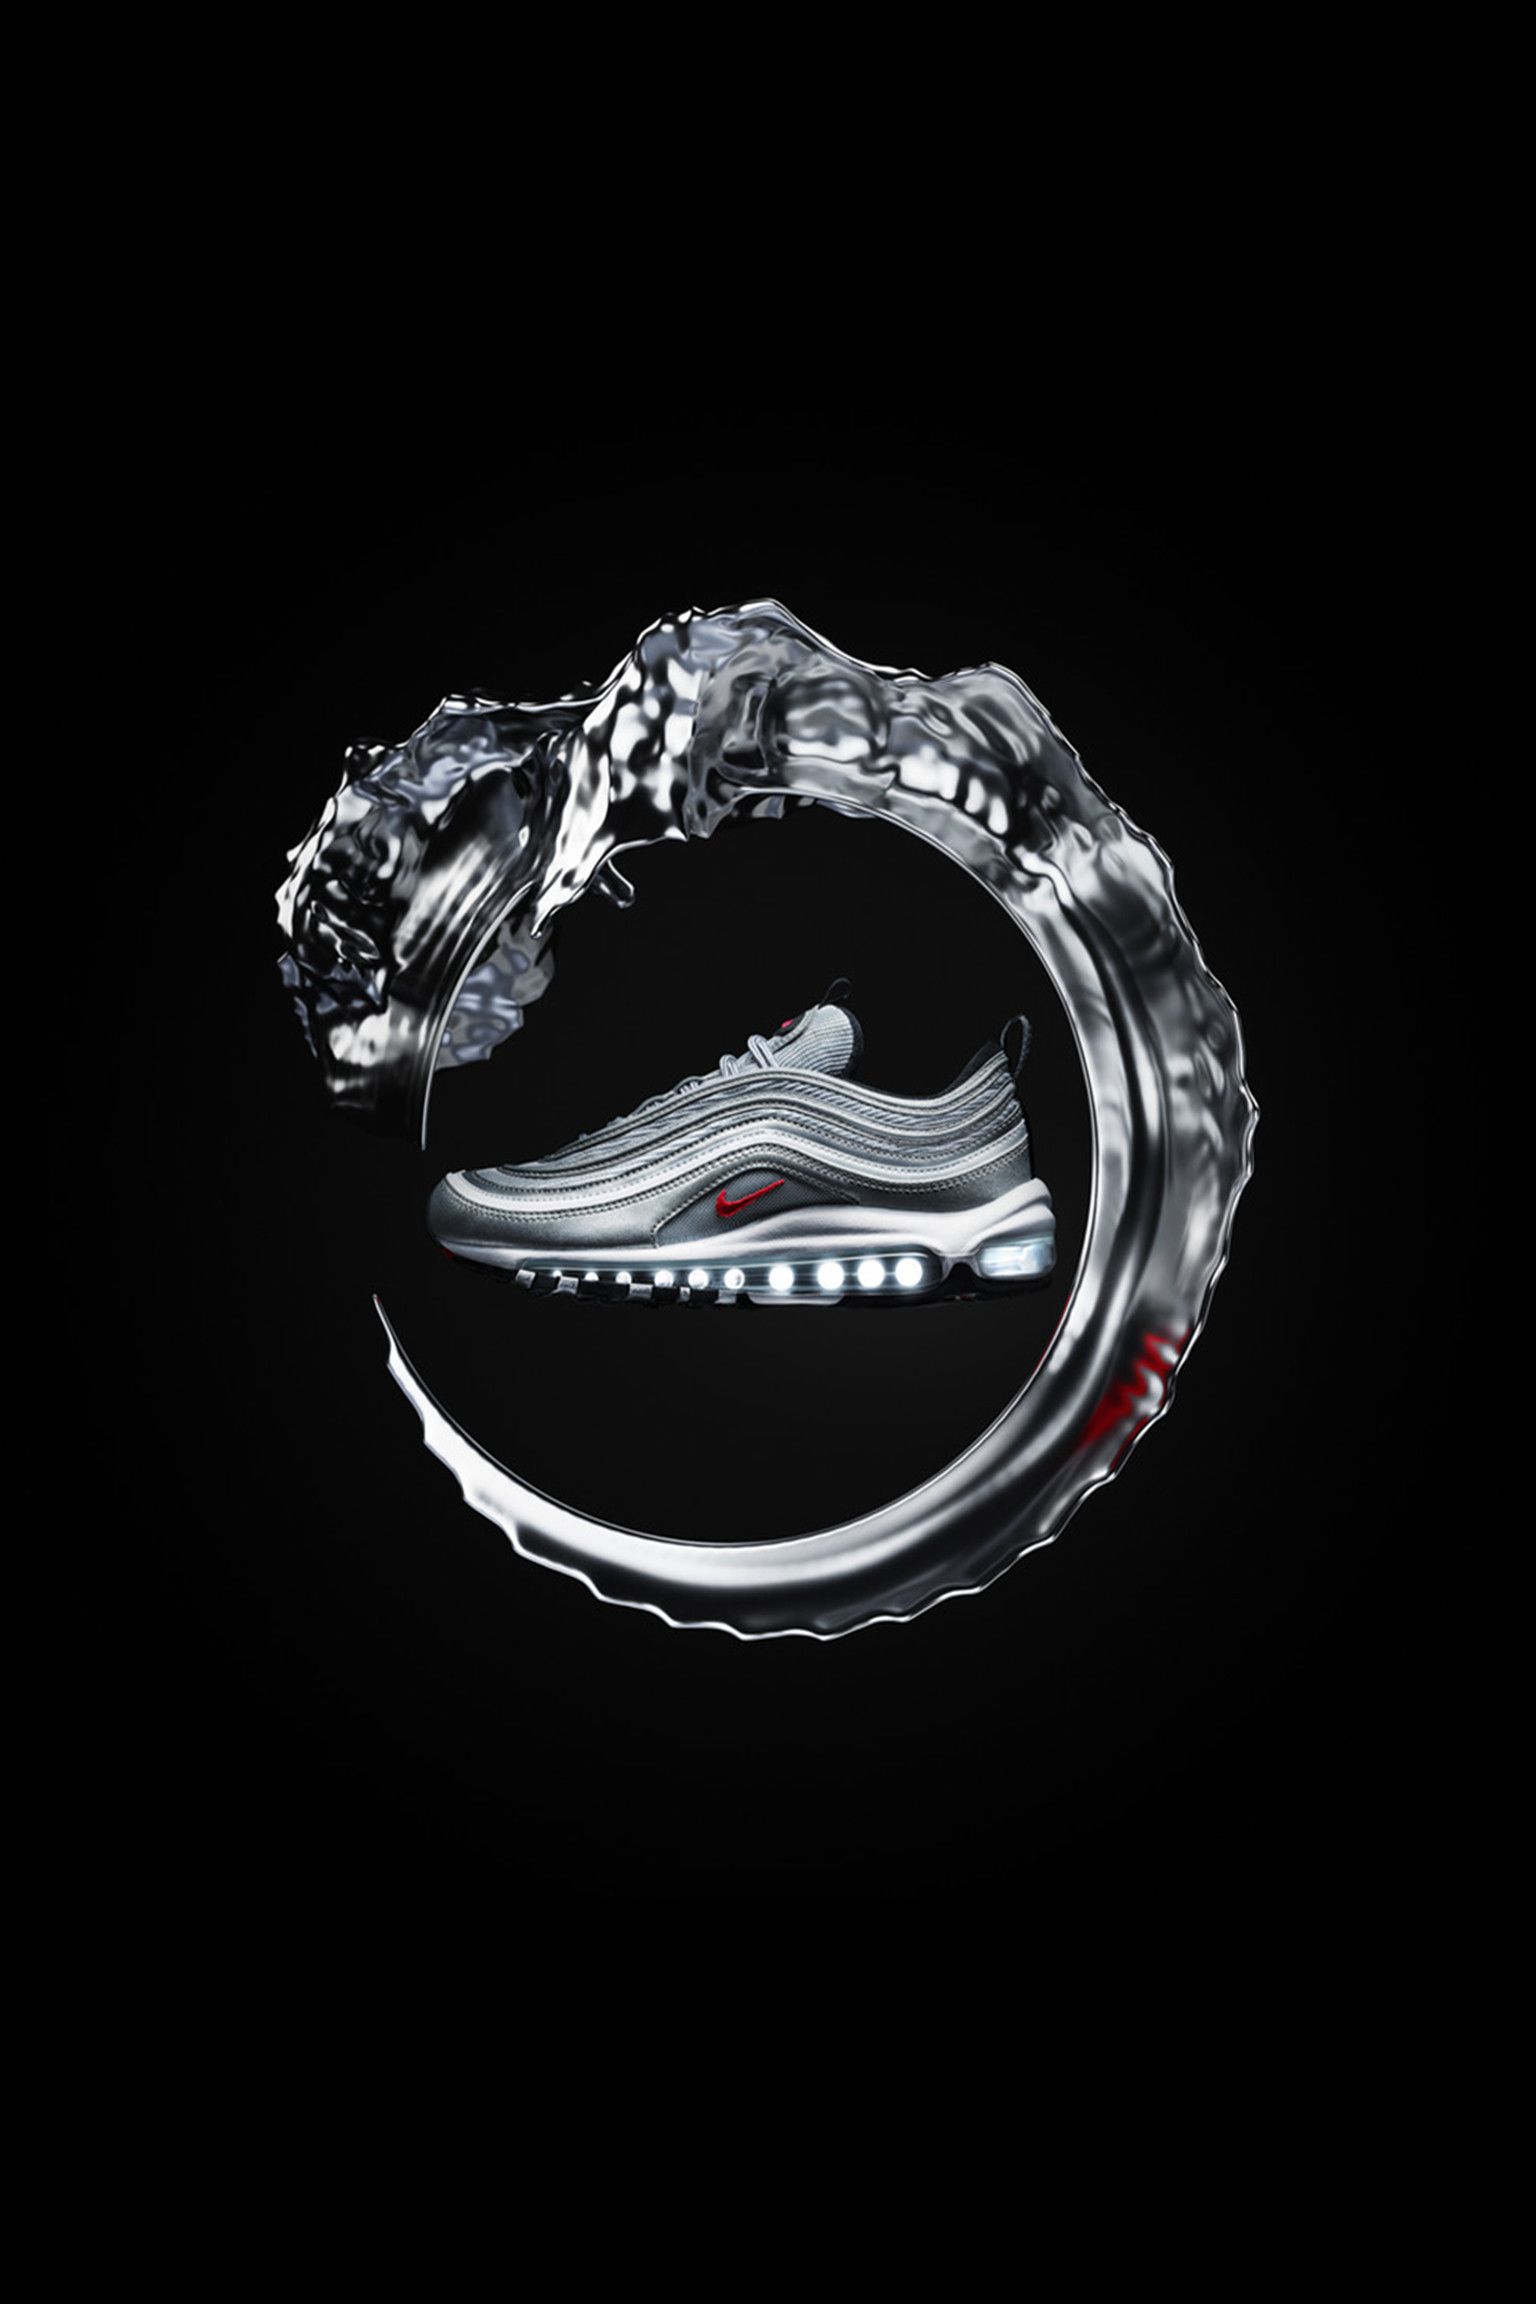 Amigo por correspondencia Indulgente ego Nike Air Max 97 OG "Metallic Silver". Nike SNKRS ES